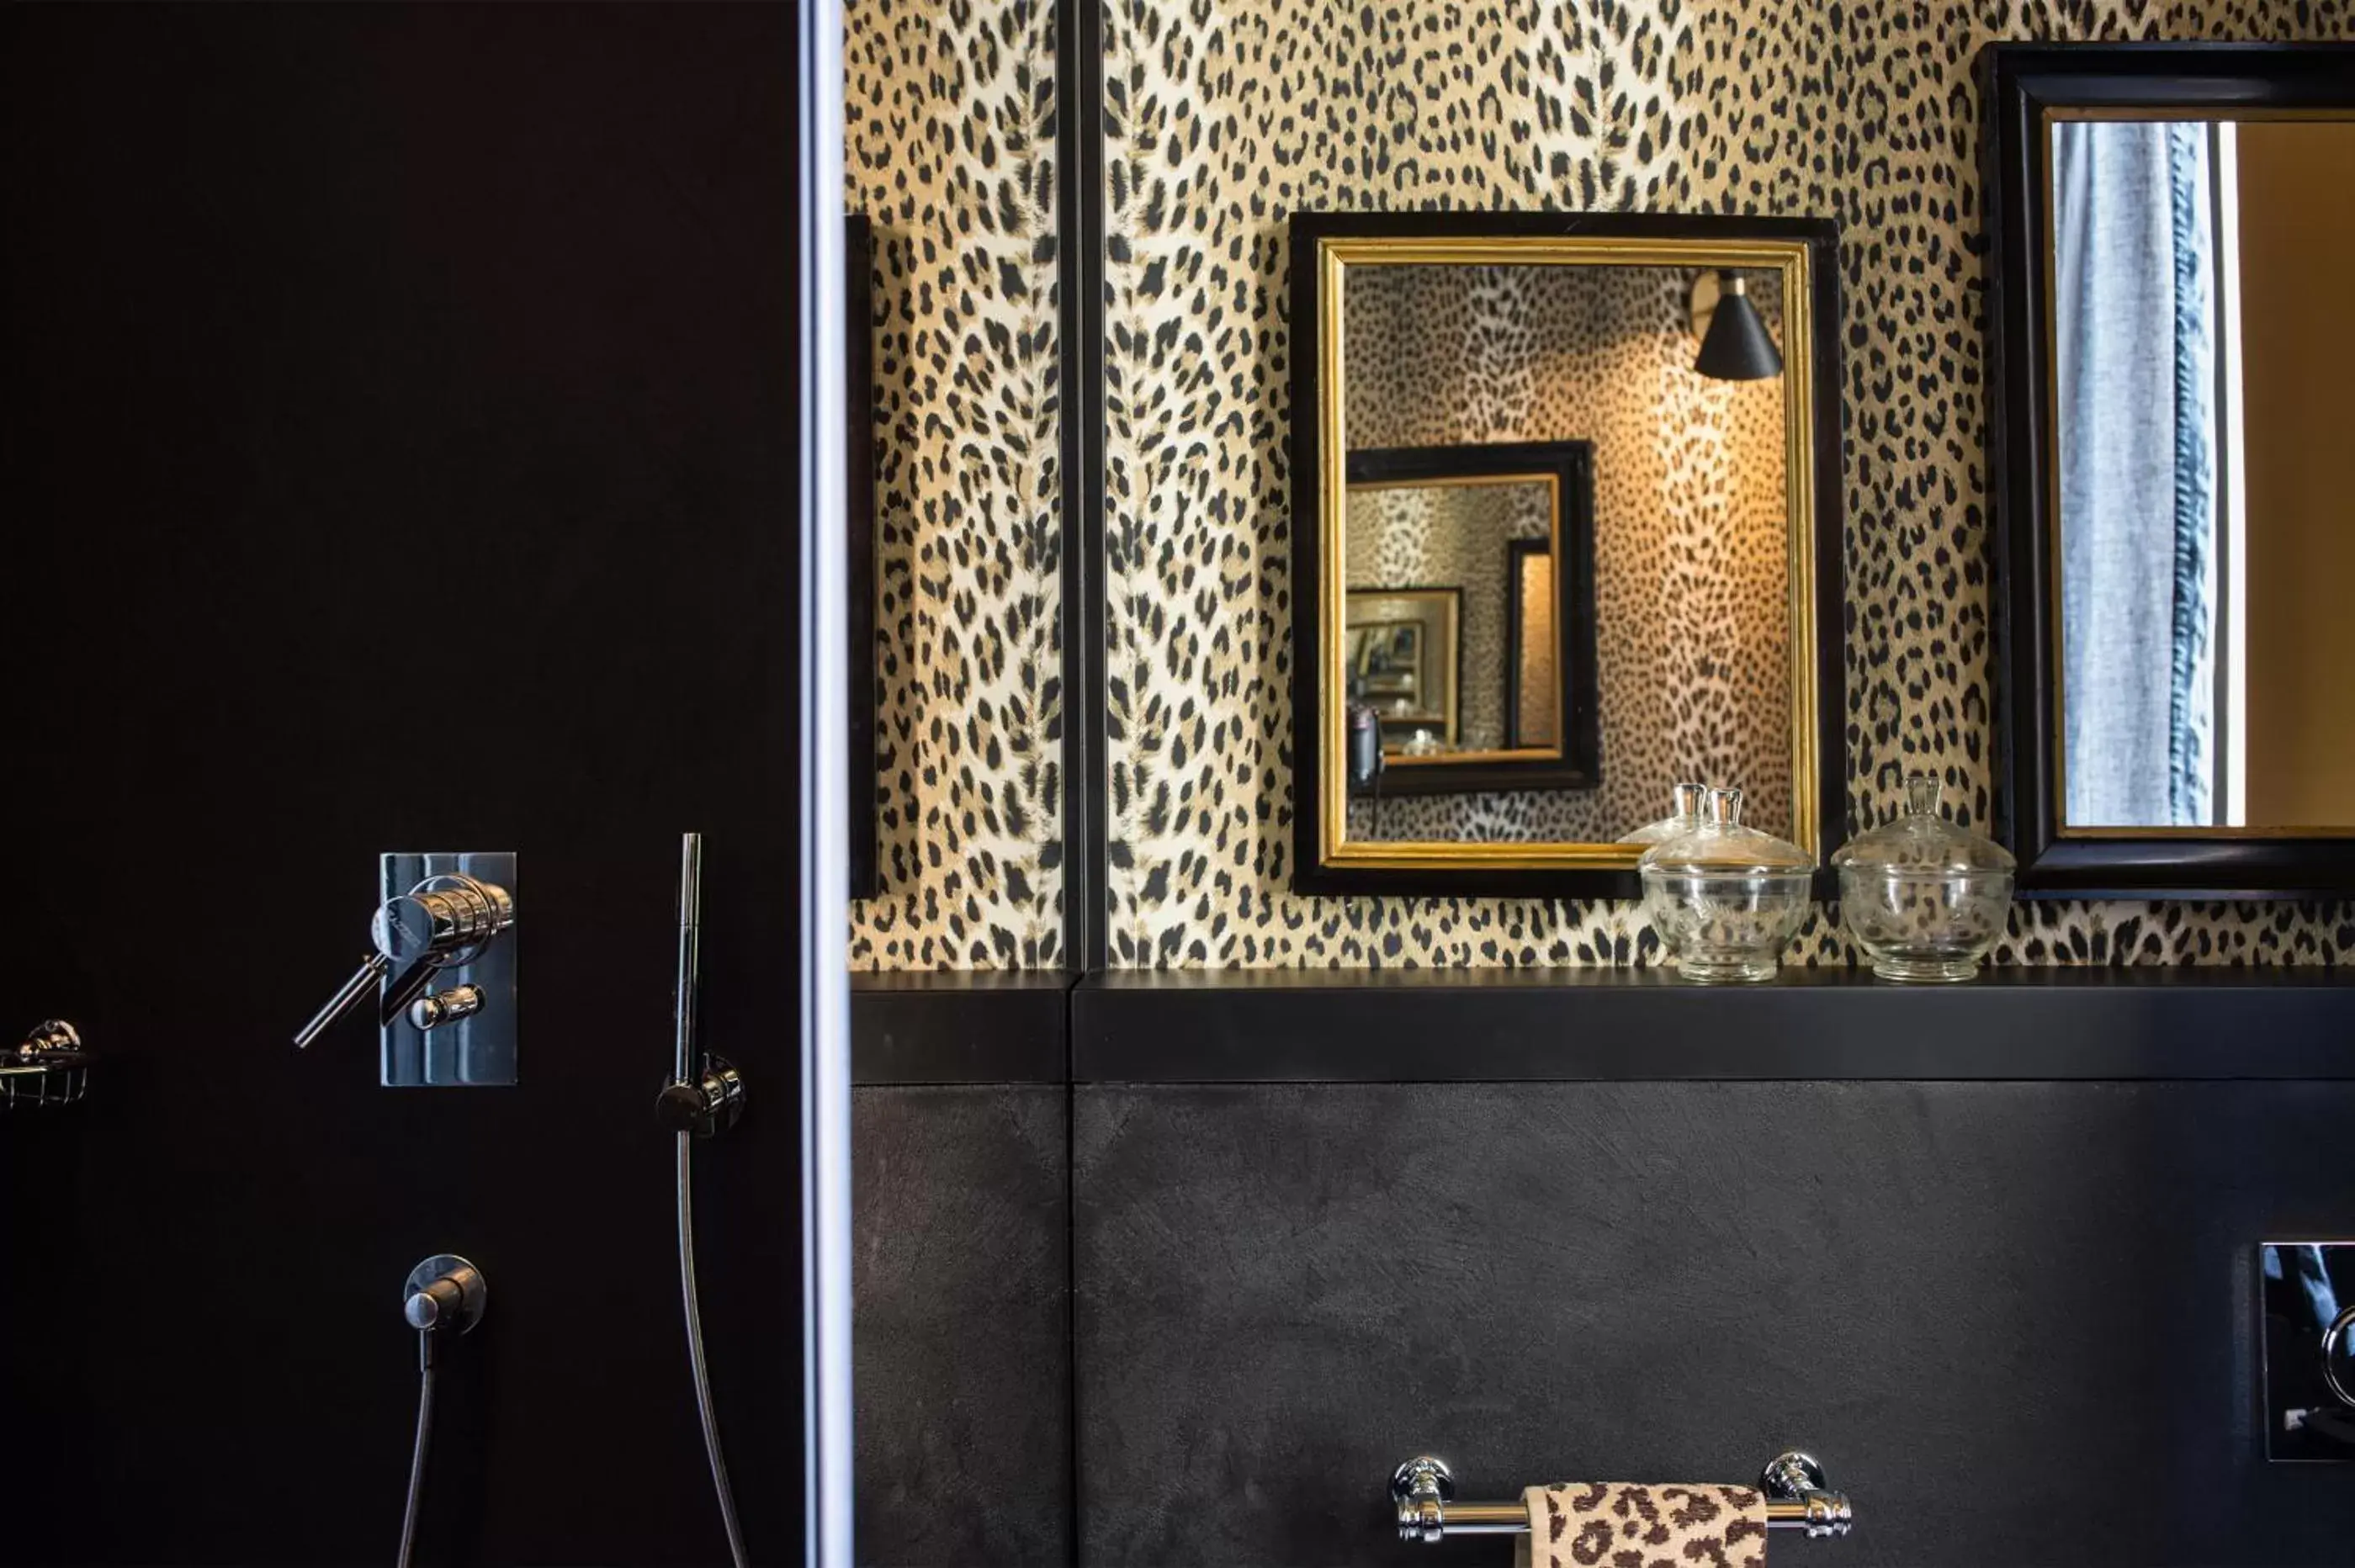 Bathroom in Velona's Jungle Luxury Suites